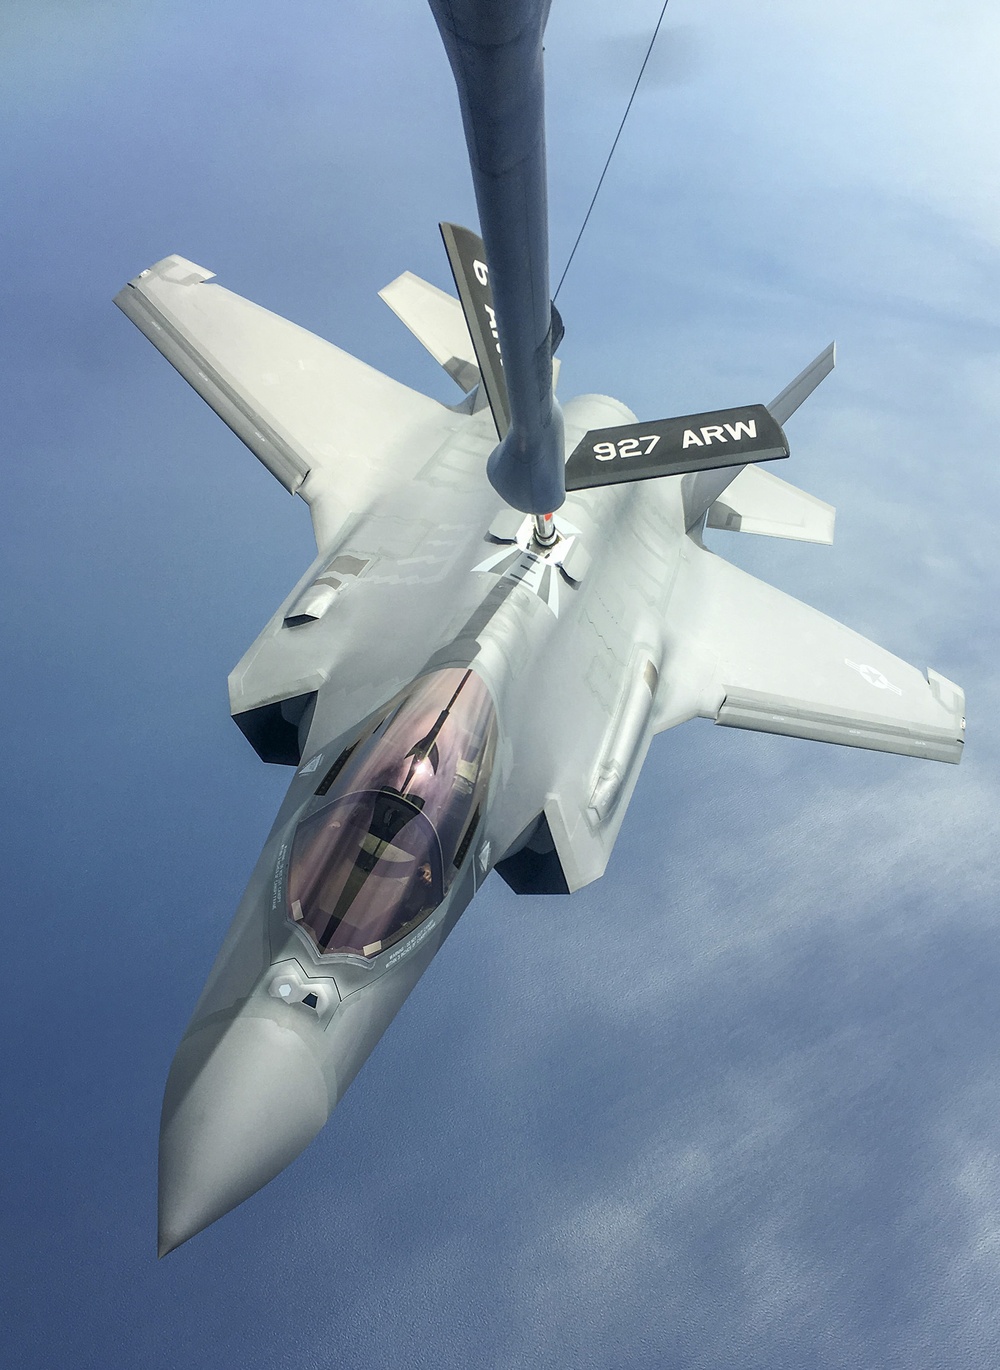 Weapons online: F-35A train syllabus advances ahead of IOC